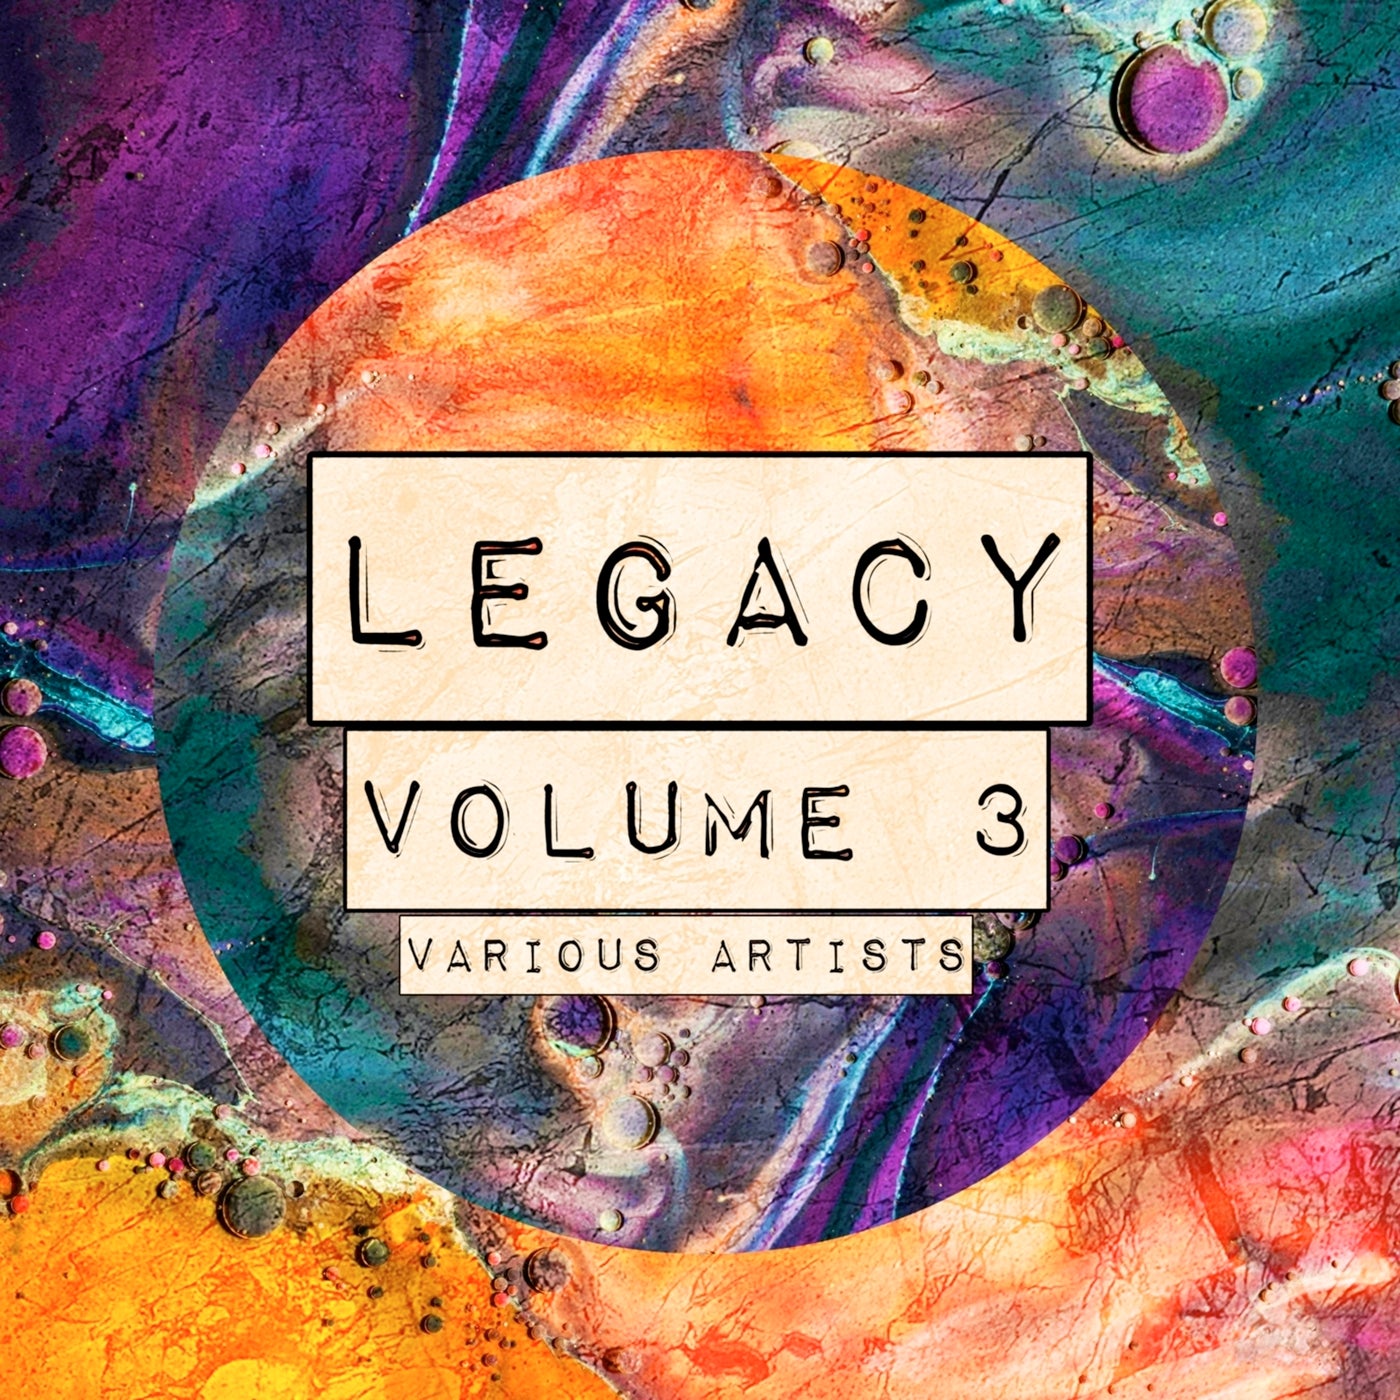 Legacy Volume 3